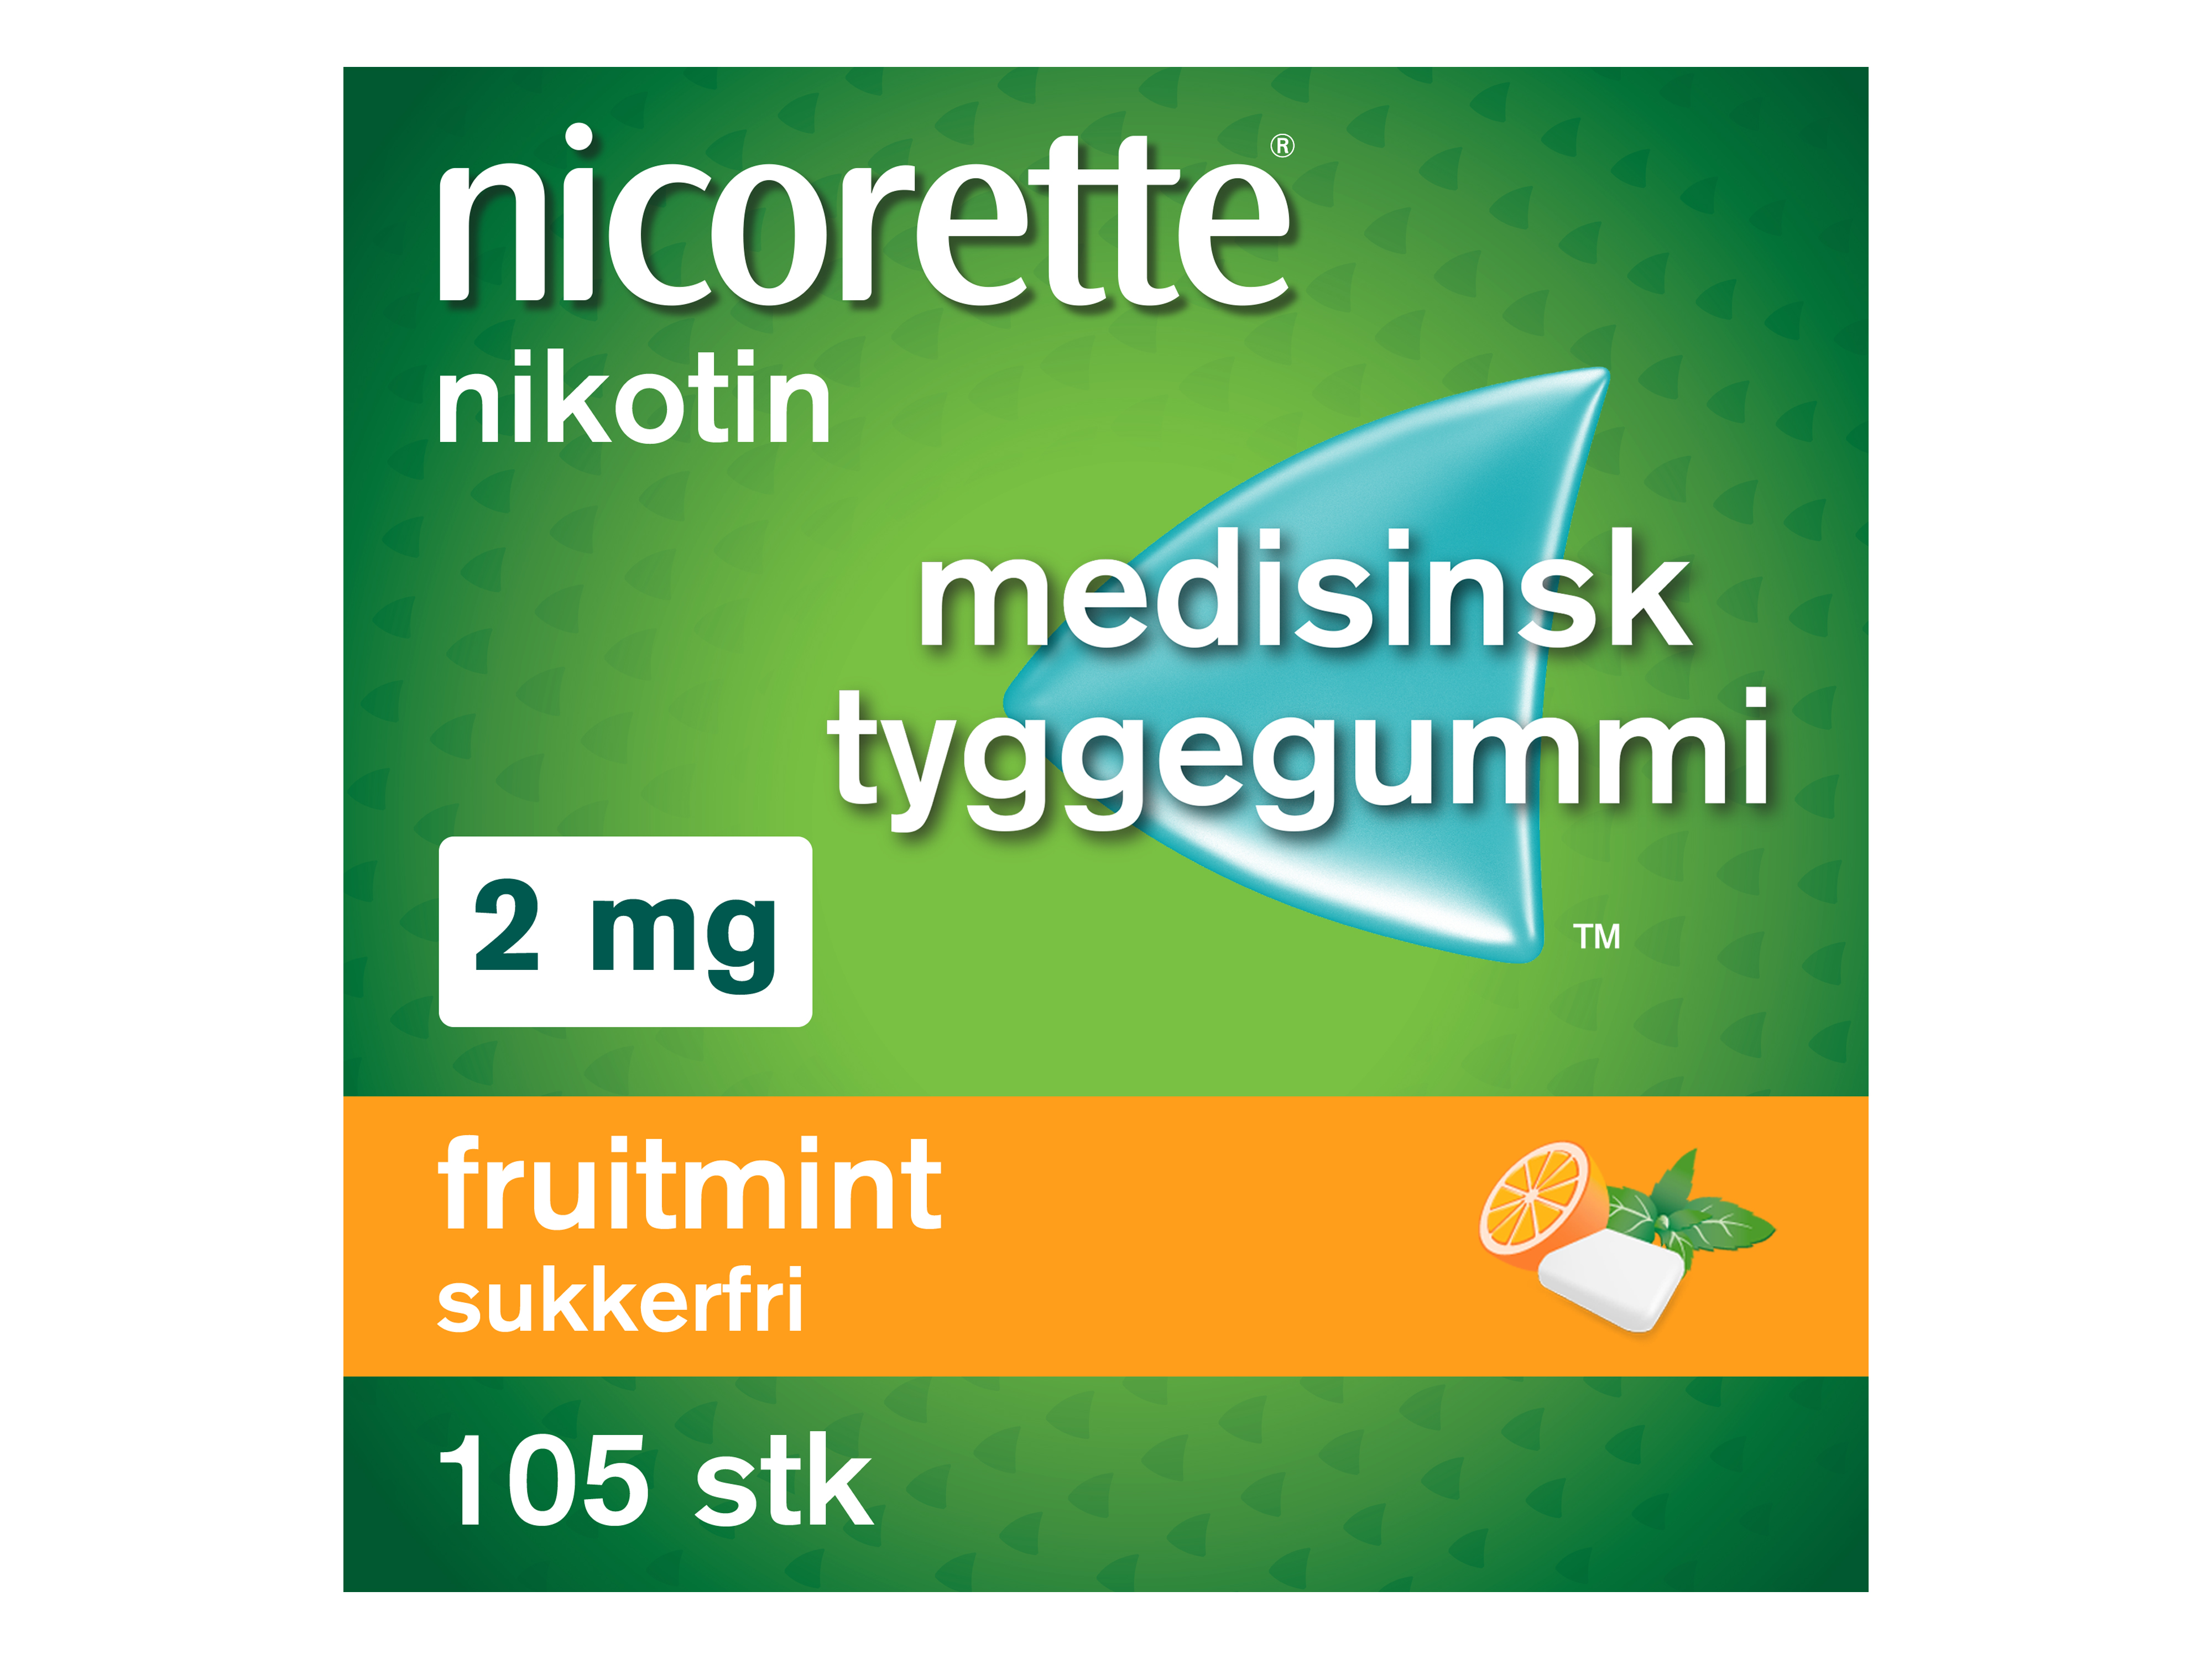 Nicorette 2 mg tyggegummi, Fruitmint, 105 stk.